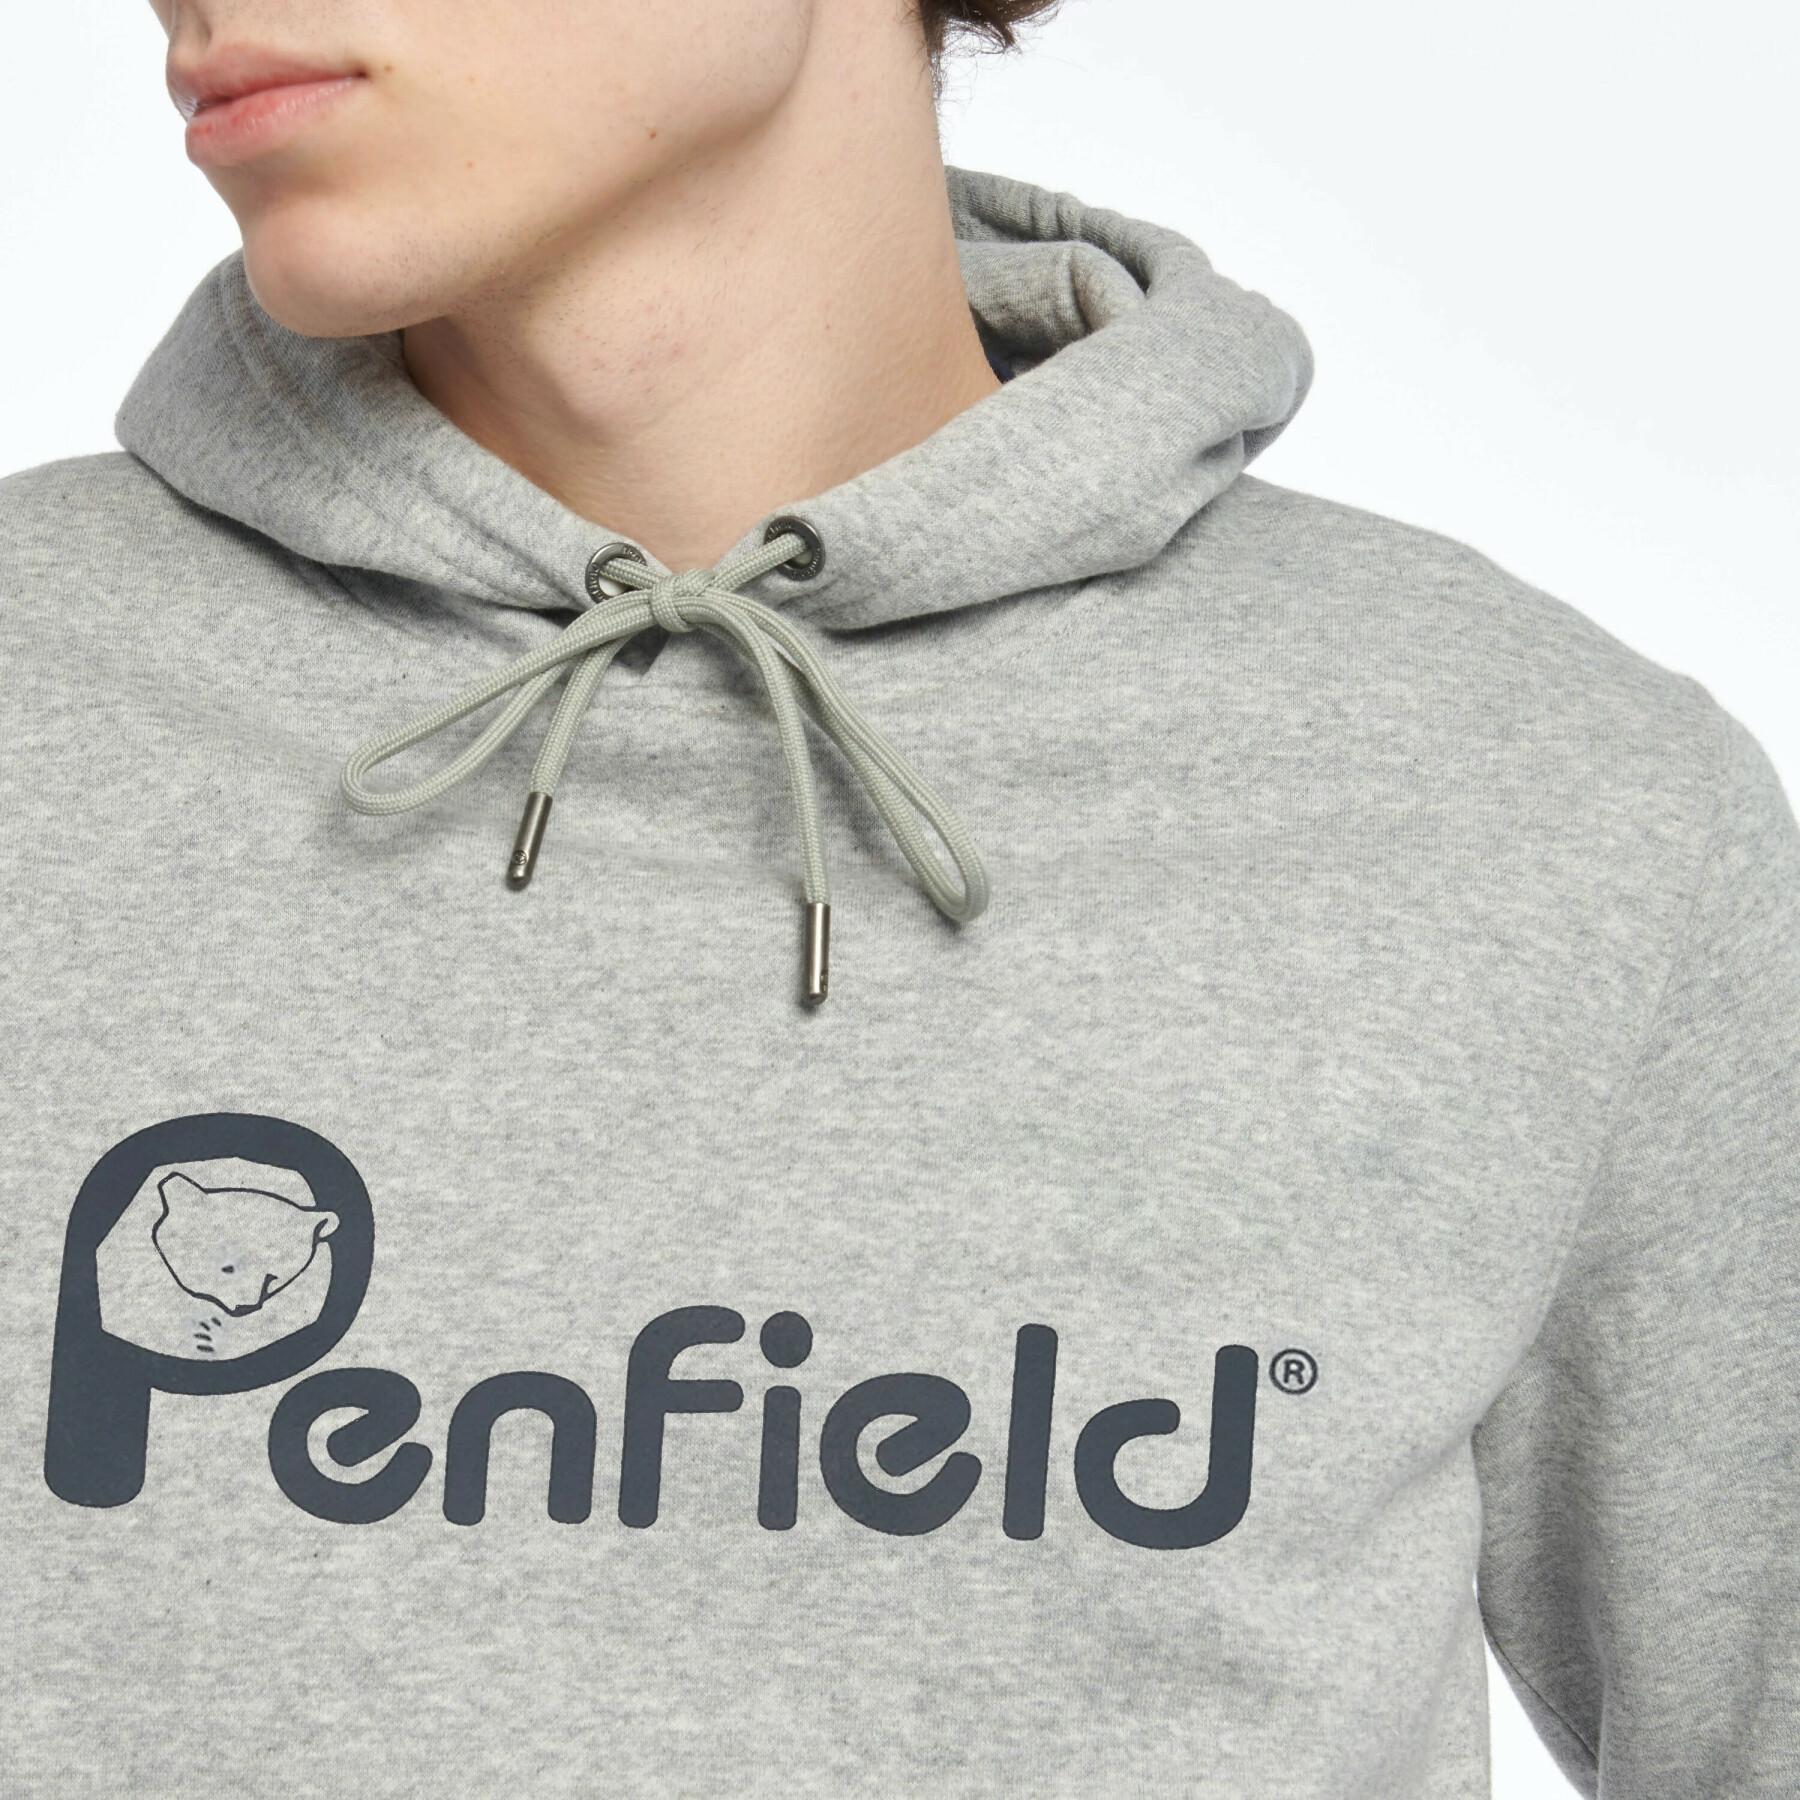 Sweatshirt à capuche Penfield Bear Chest Print